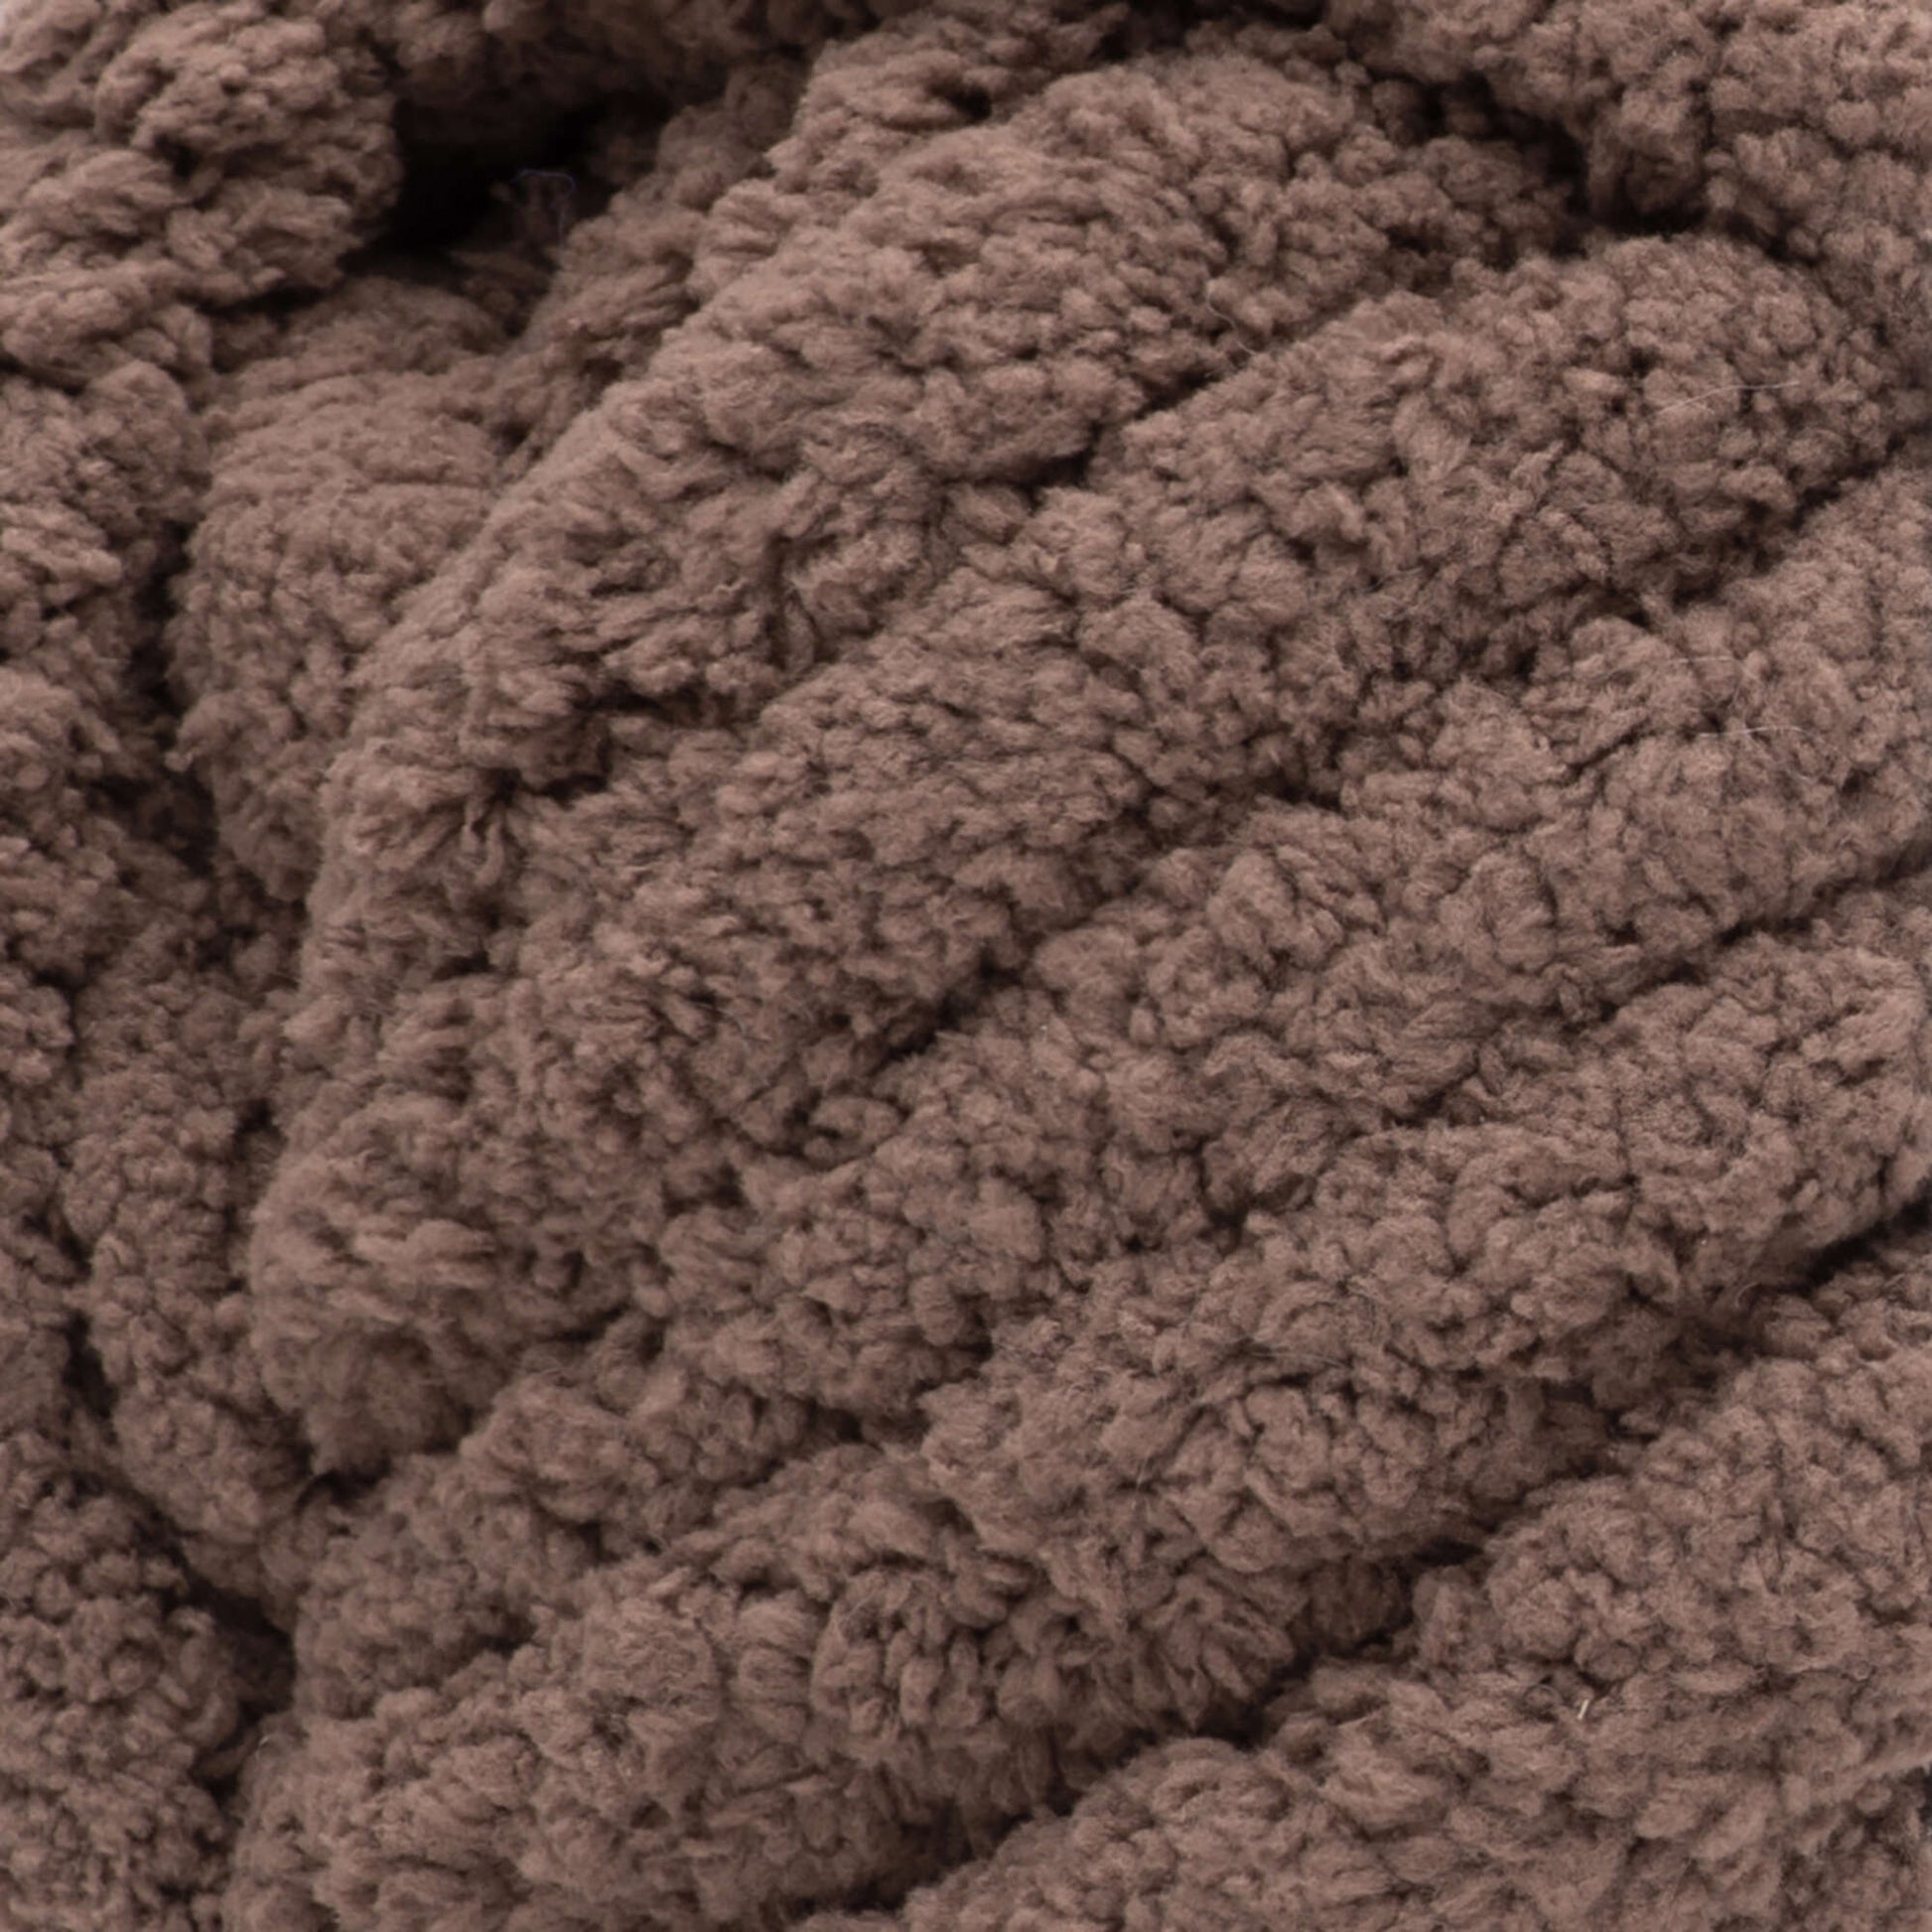 Bernat Blanket Big Yarn (300g/10.5oz) Taupe